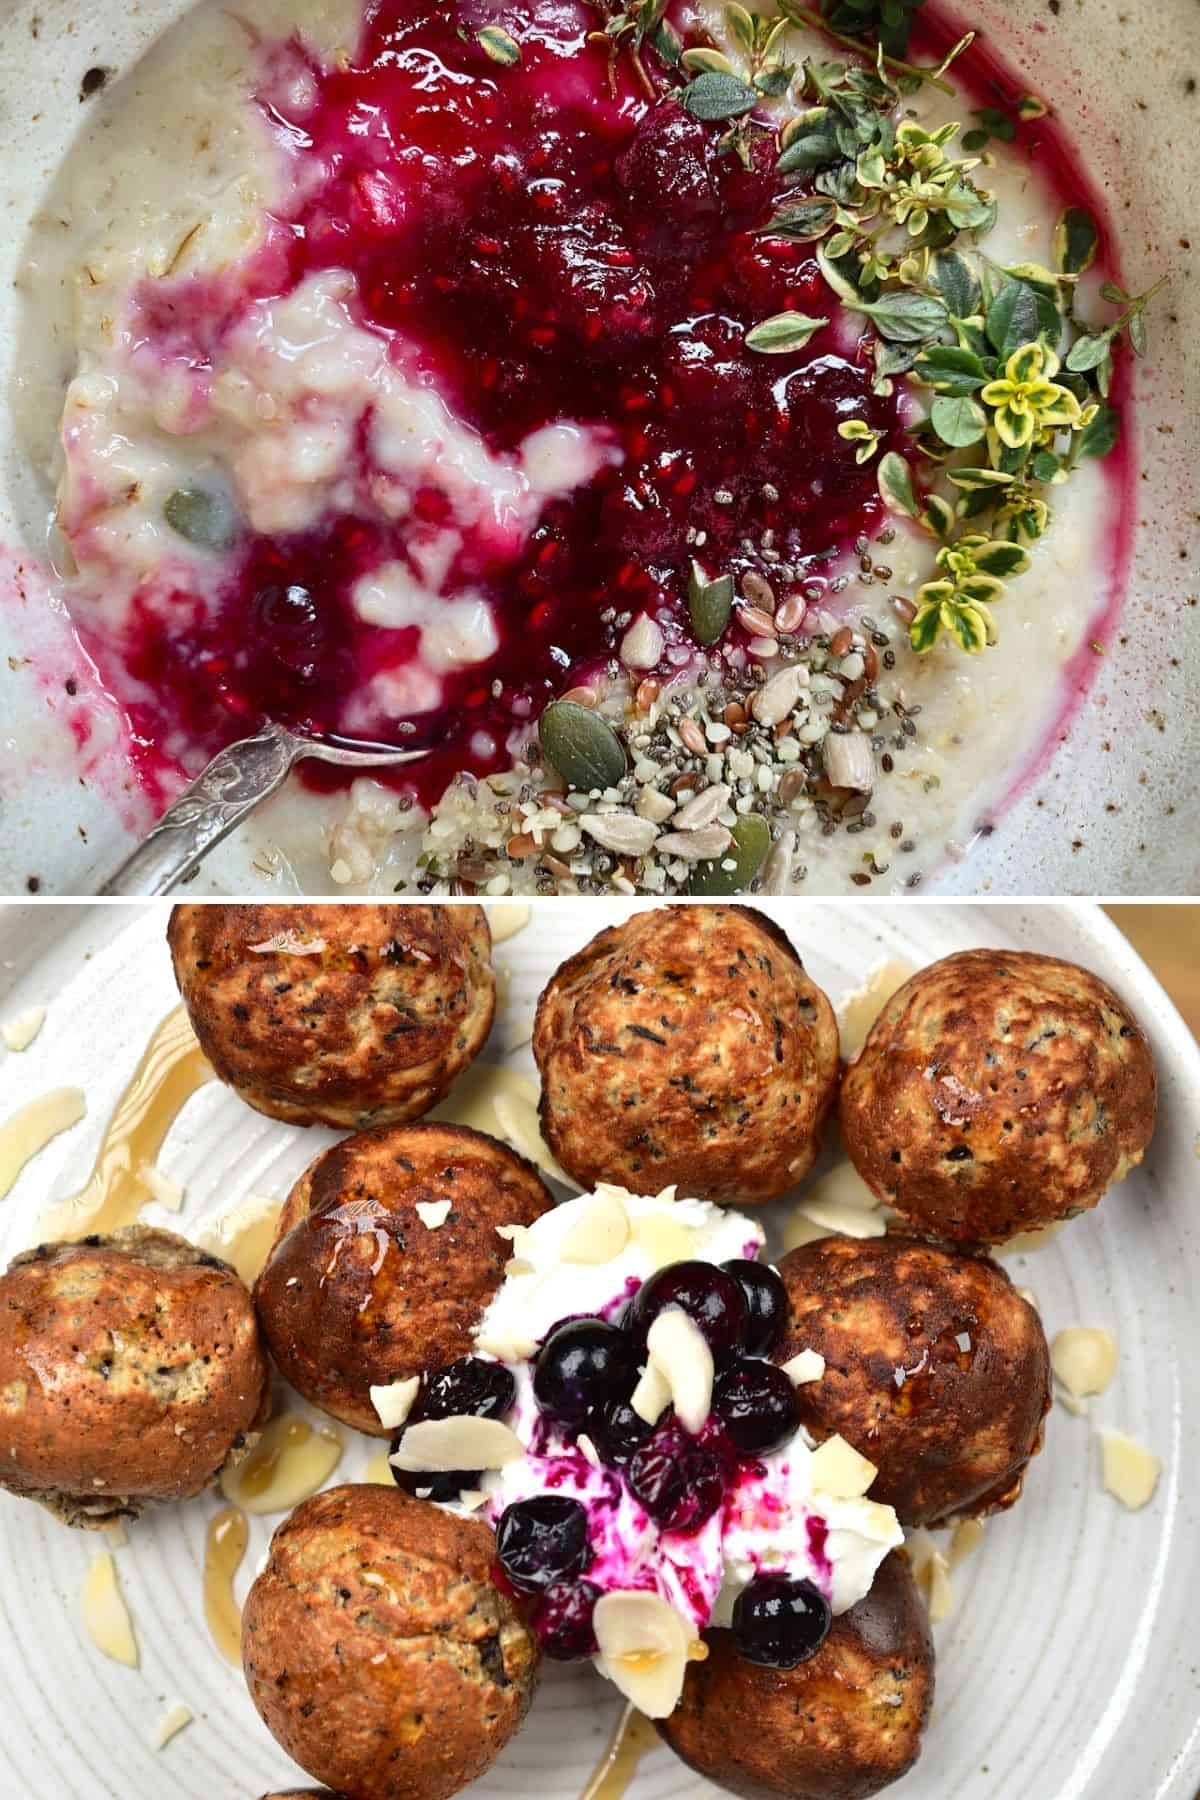 Two North European breakfast ideas - porridge, Danish pancake balls.